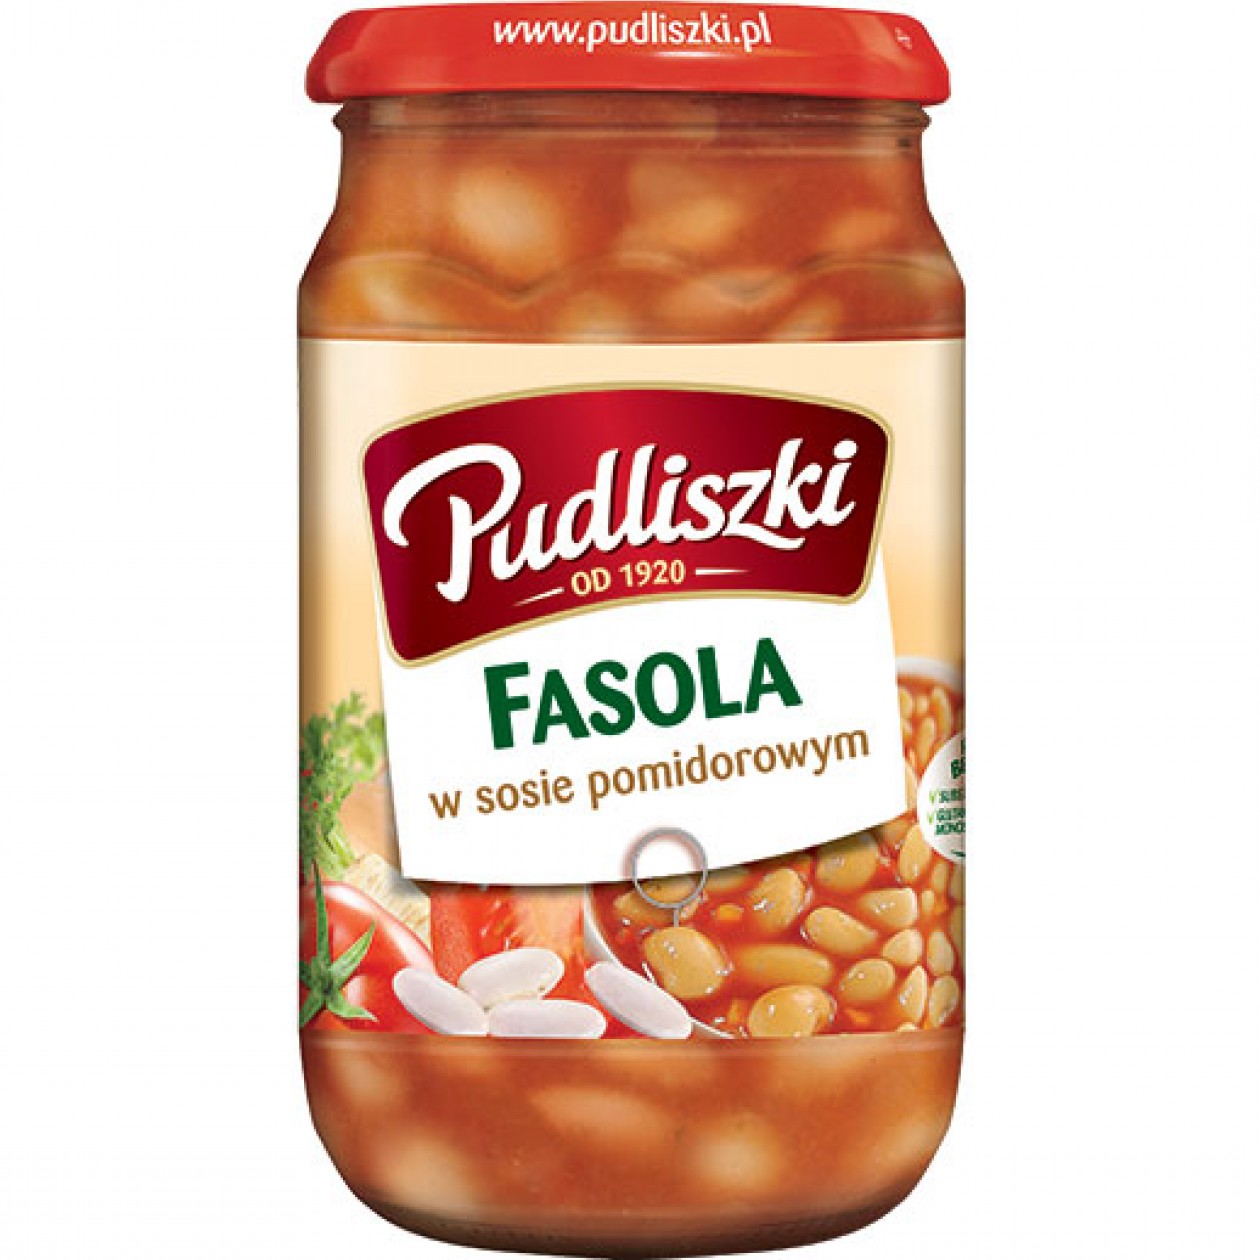 Pudliszki Beans In Tomato Sauce (Fasola) 620g